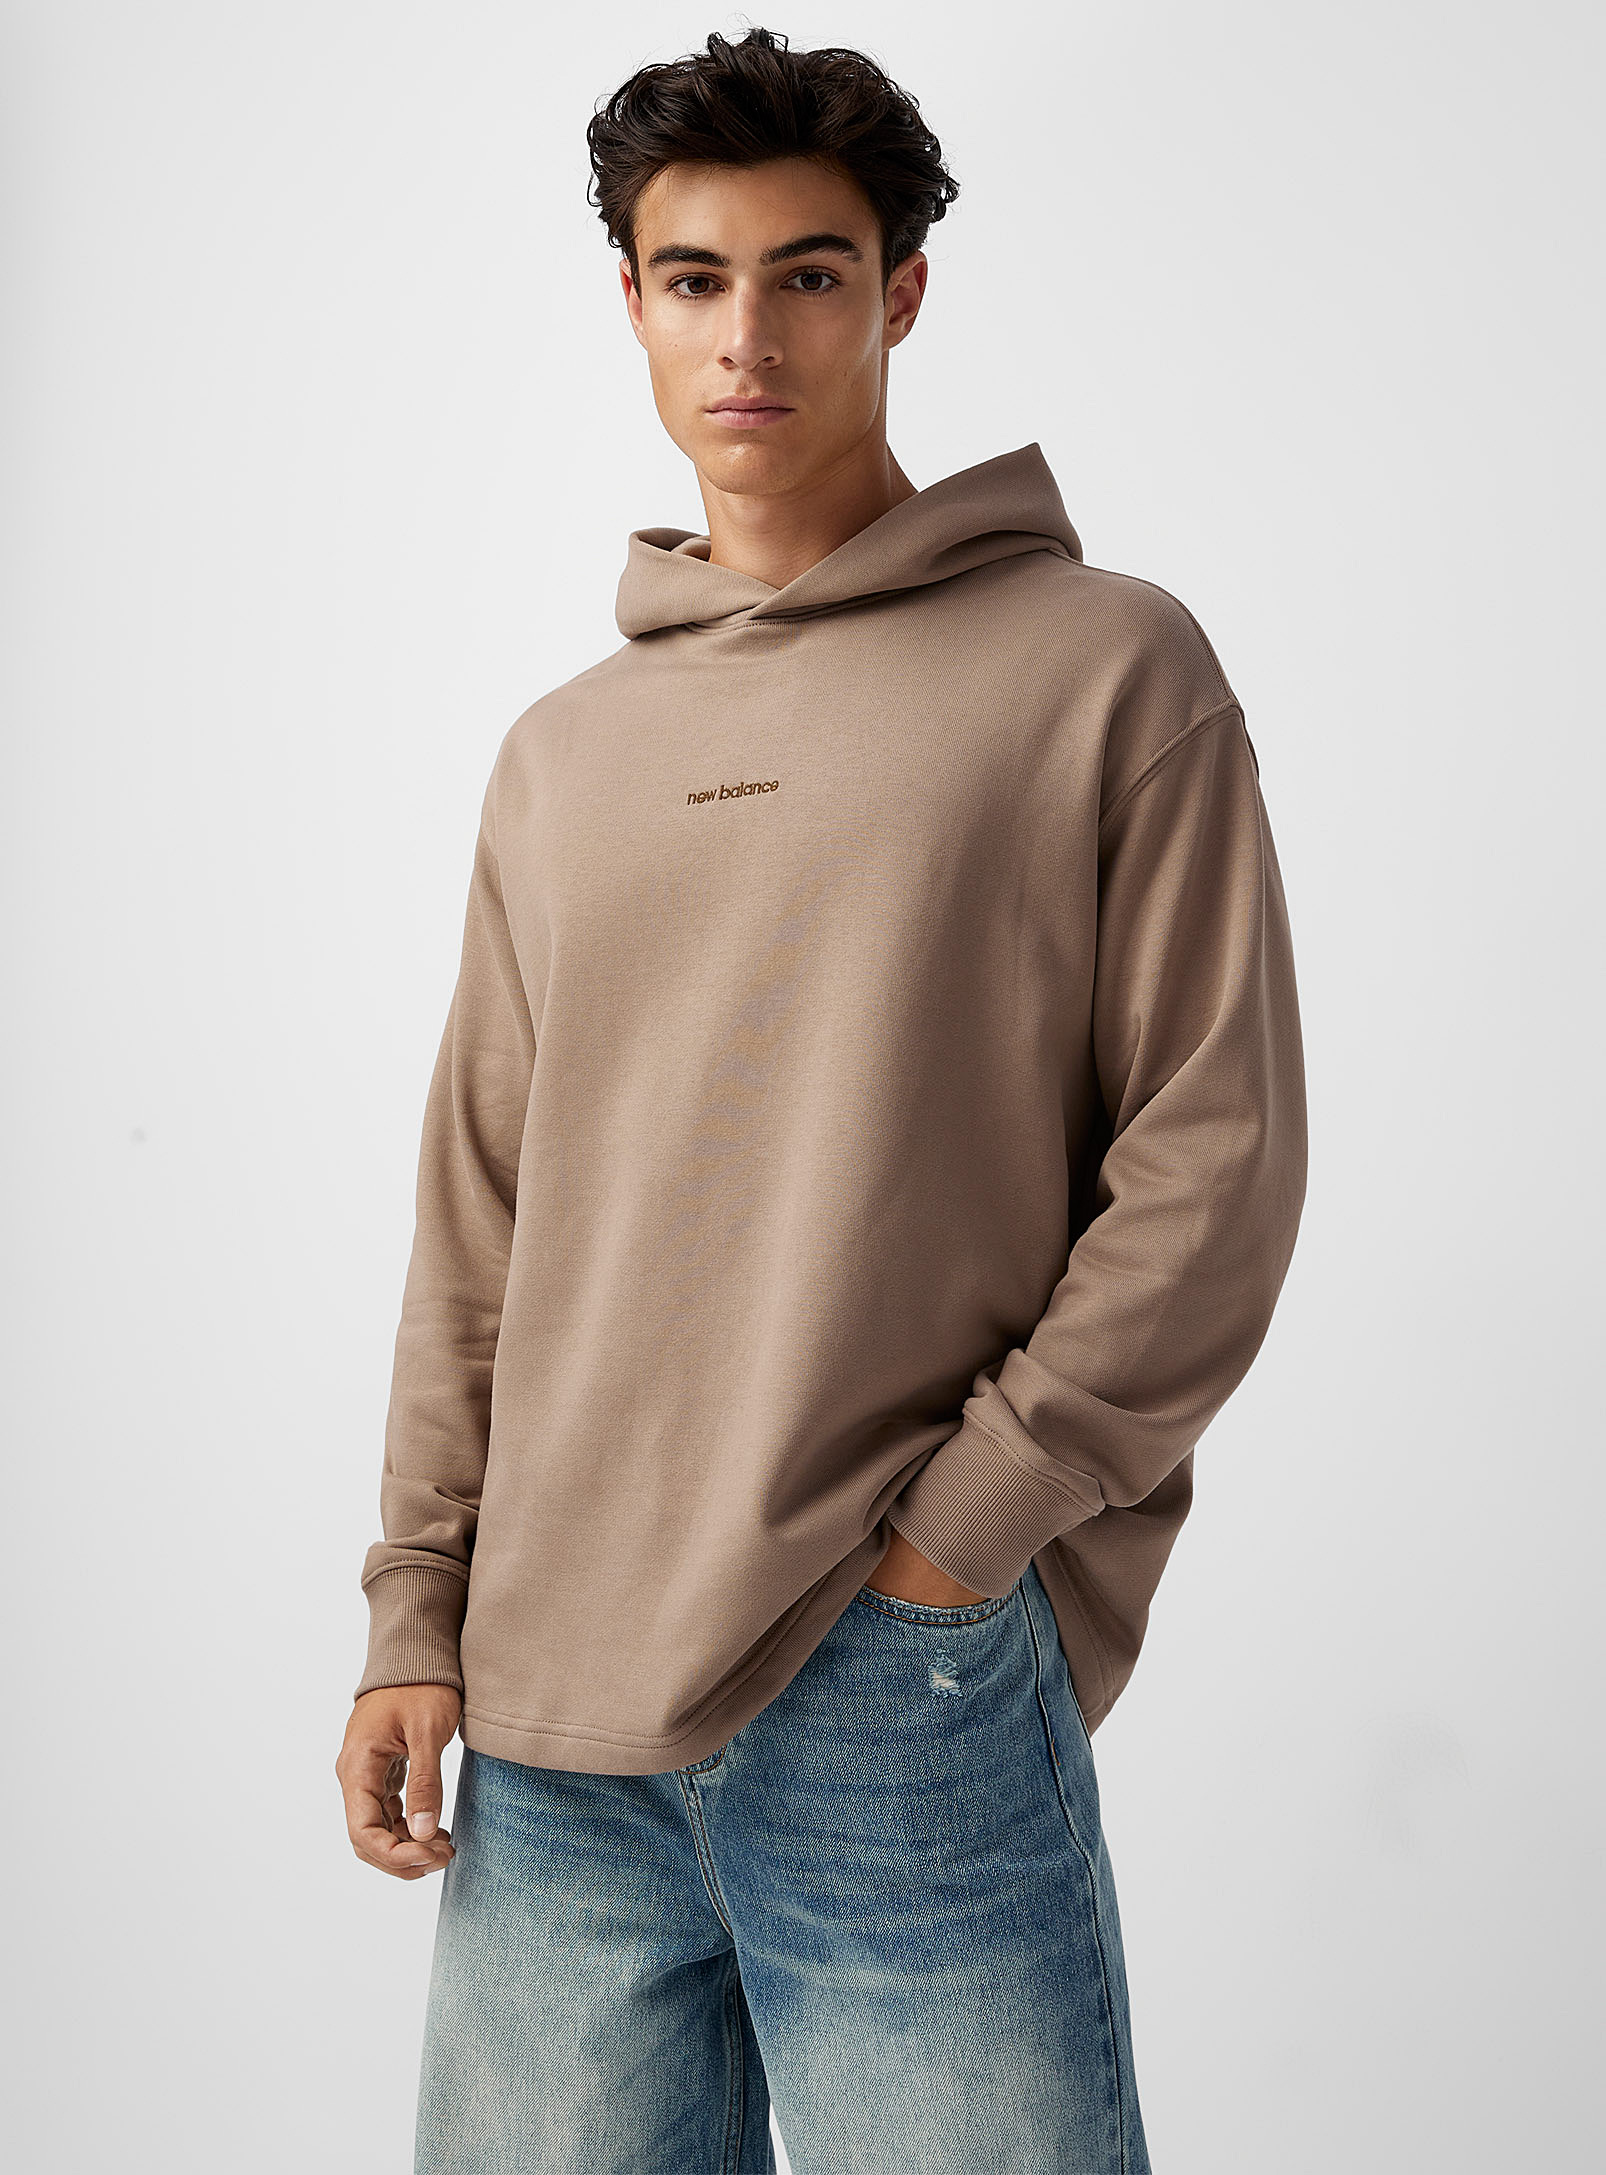 New Balance - Men's Minimalist logo hooded sweatshirt